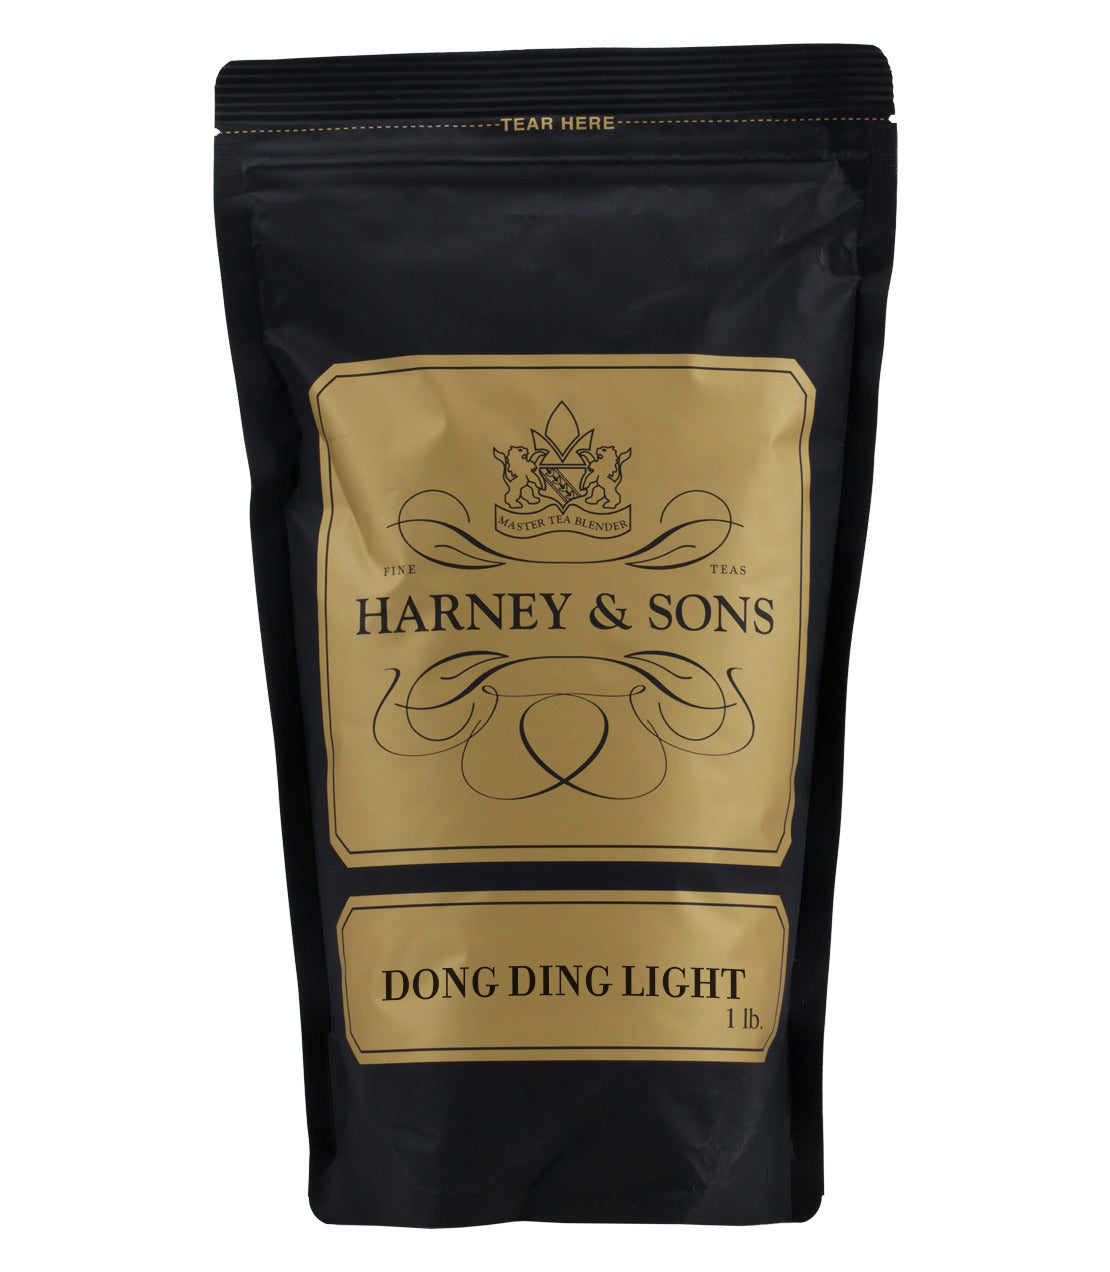 Dong Ding Light - Loose 1 lb. Bag - Harney & Sons Fine Teas